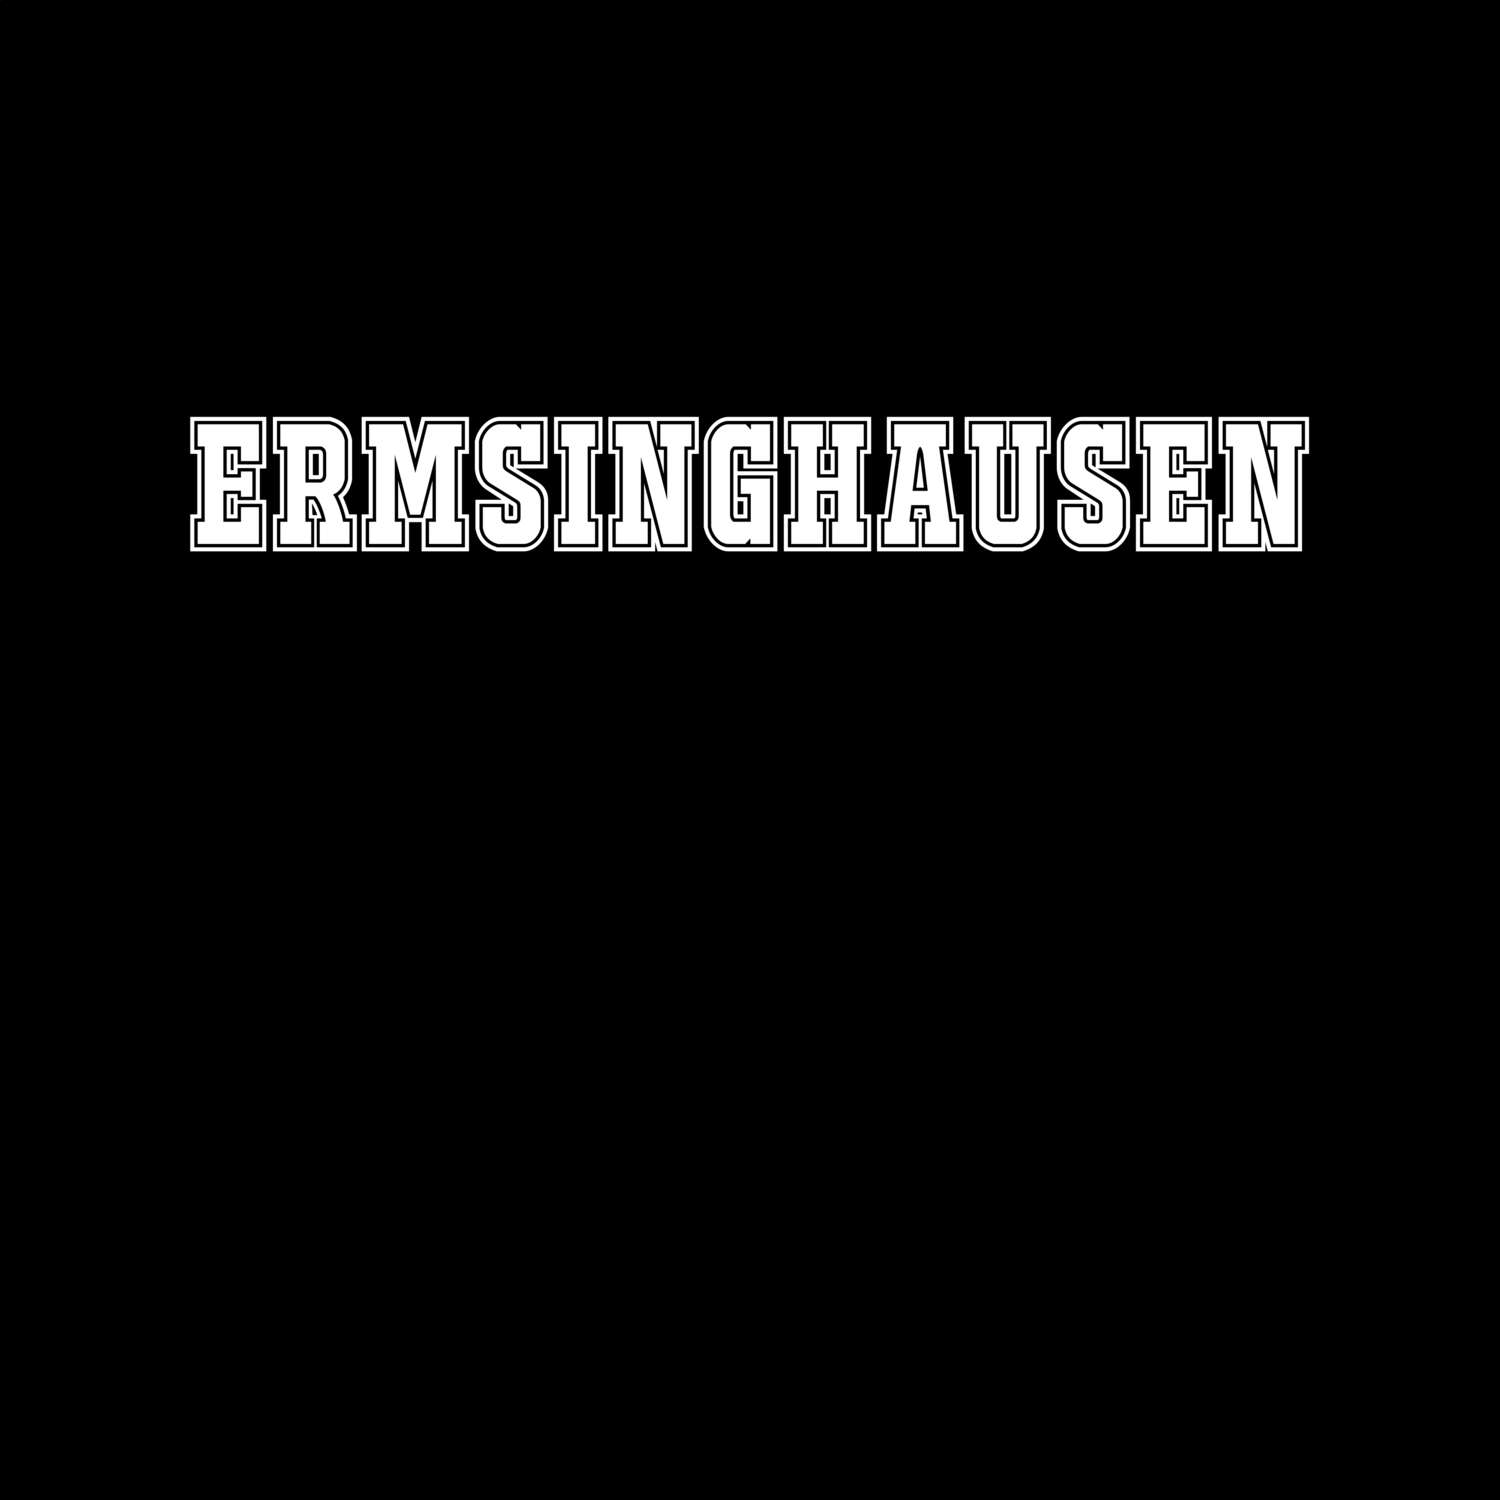 Ermsinghausen T-Shirt »Classic«